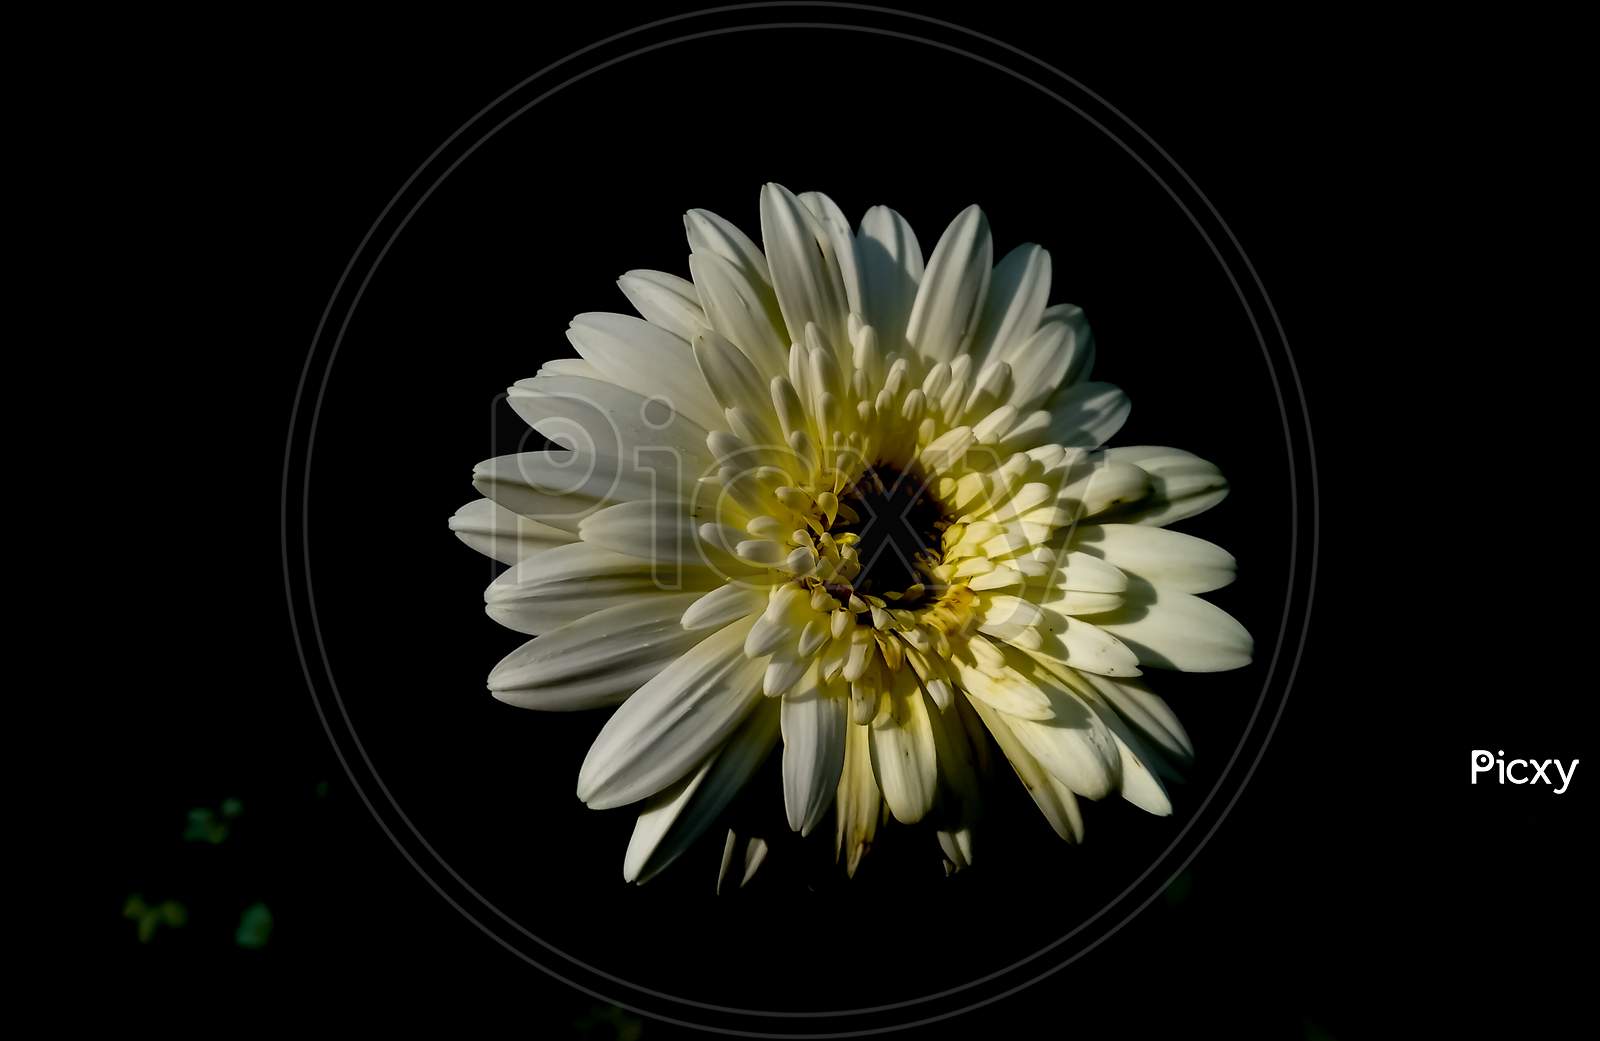 Gerbera Daisy flower on black background